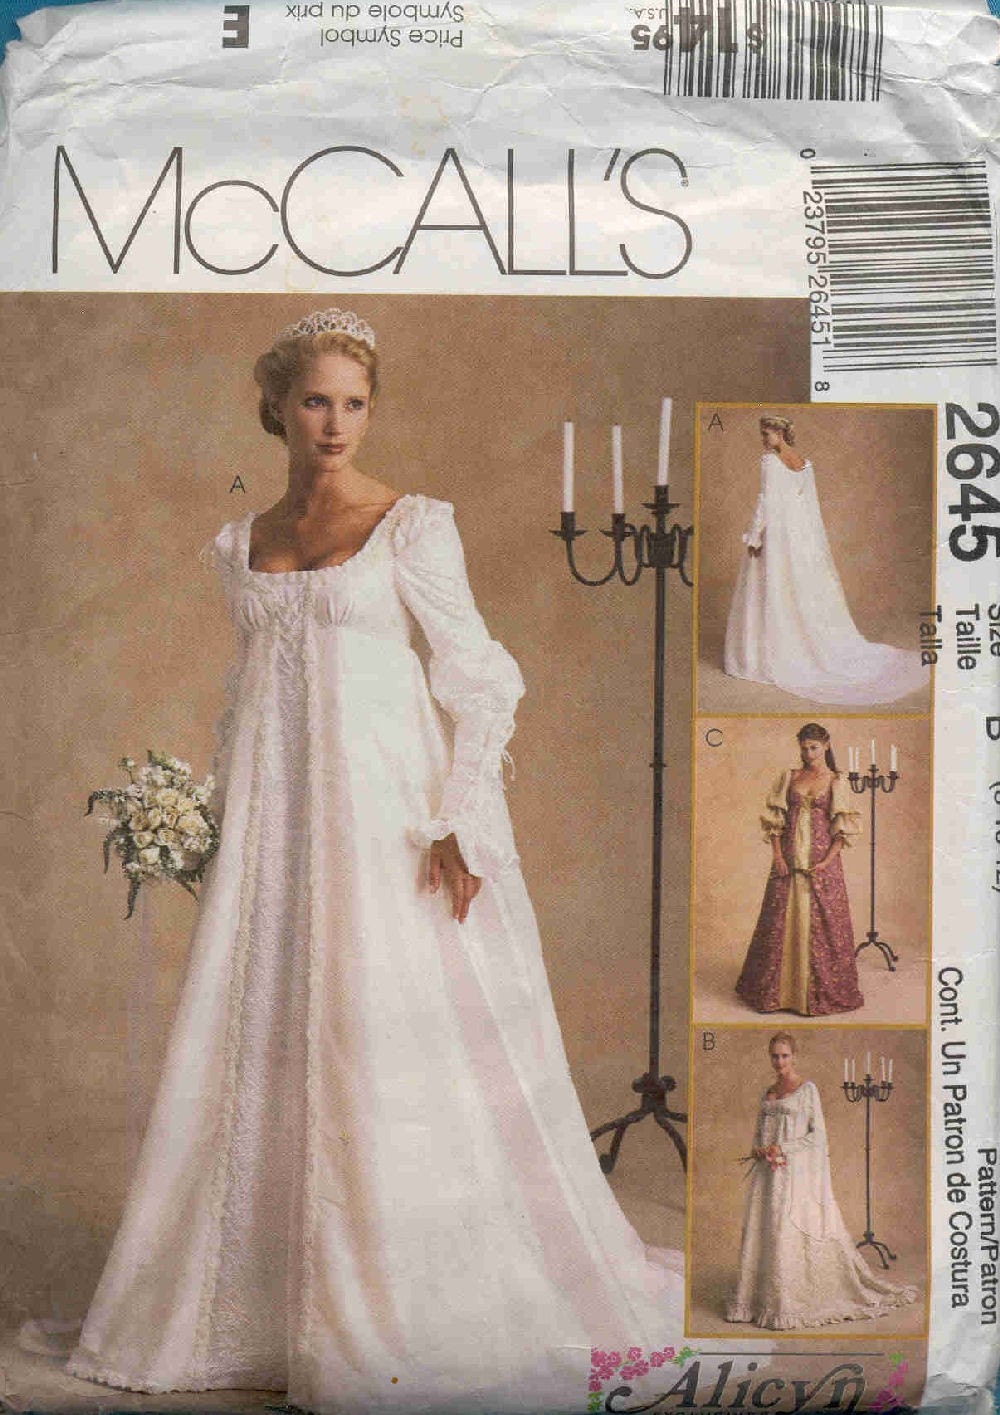 McCall 39s 2645 Renaissance Inspired Wedding Dress pattern by Alycin 